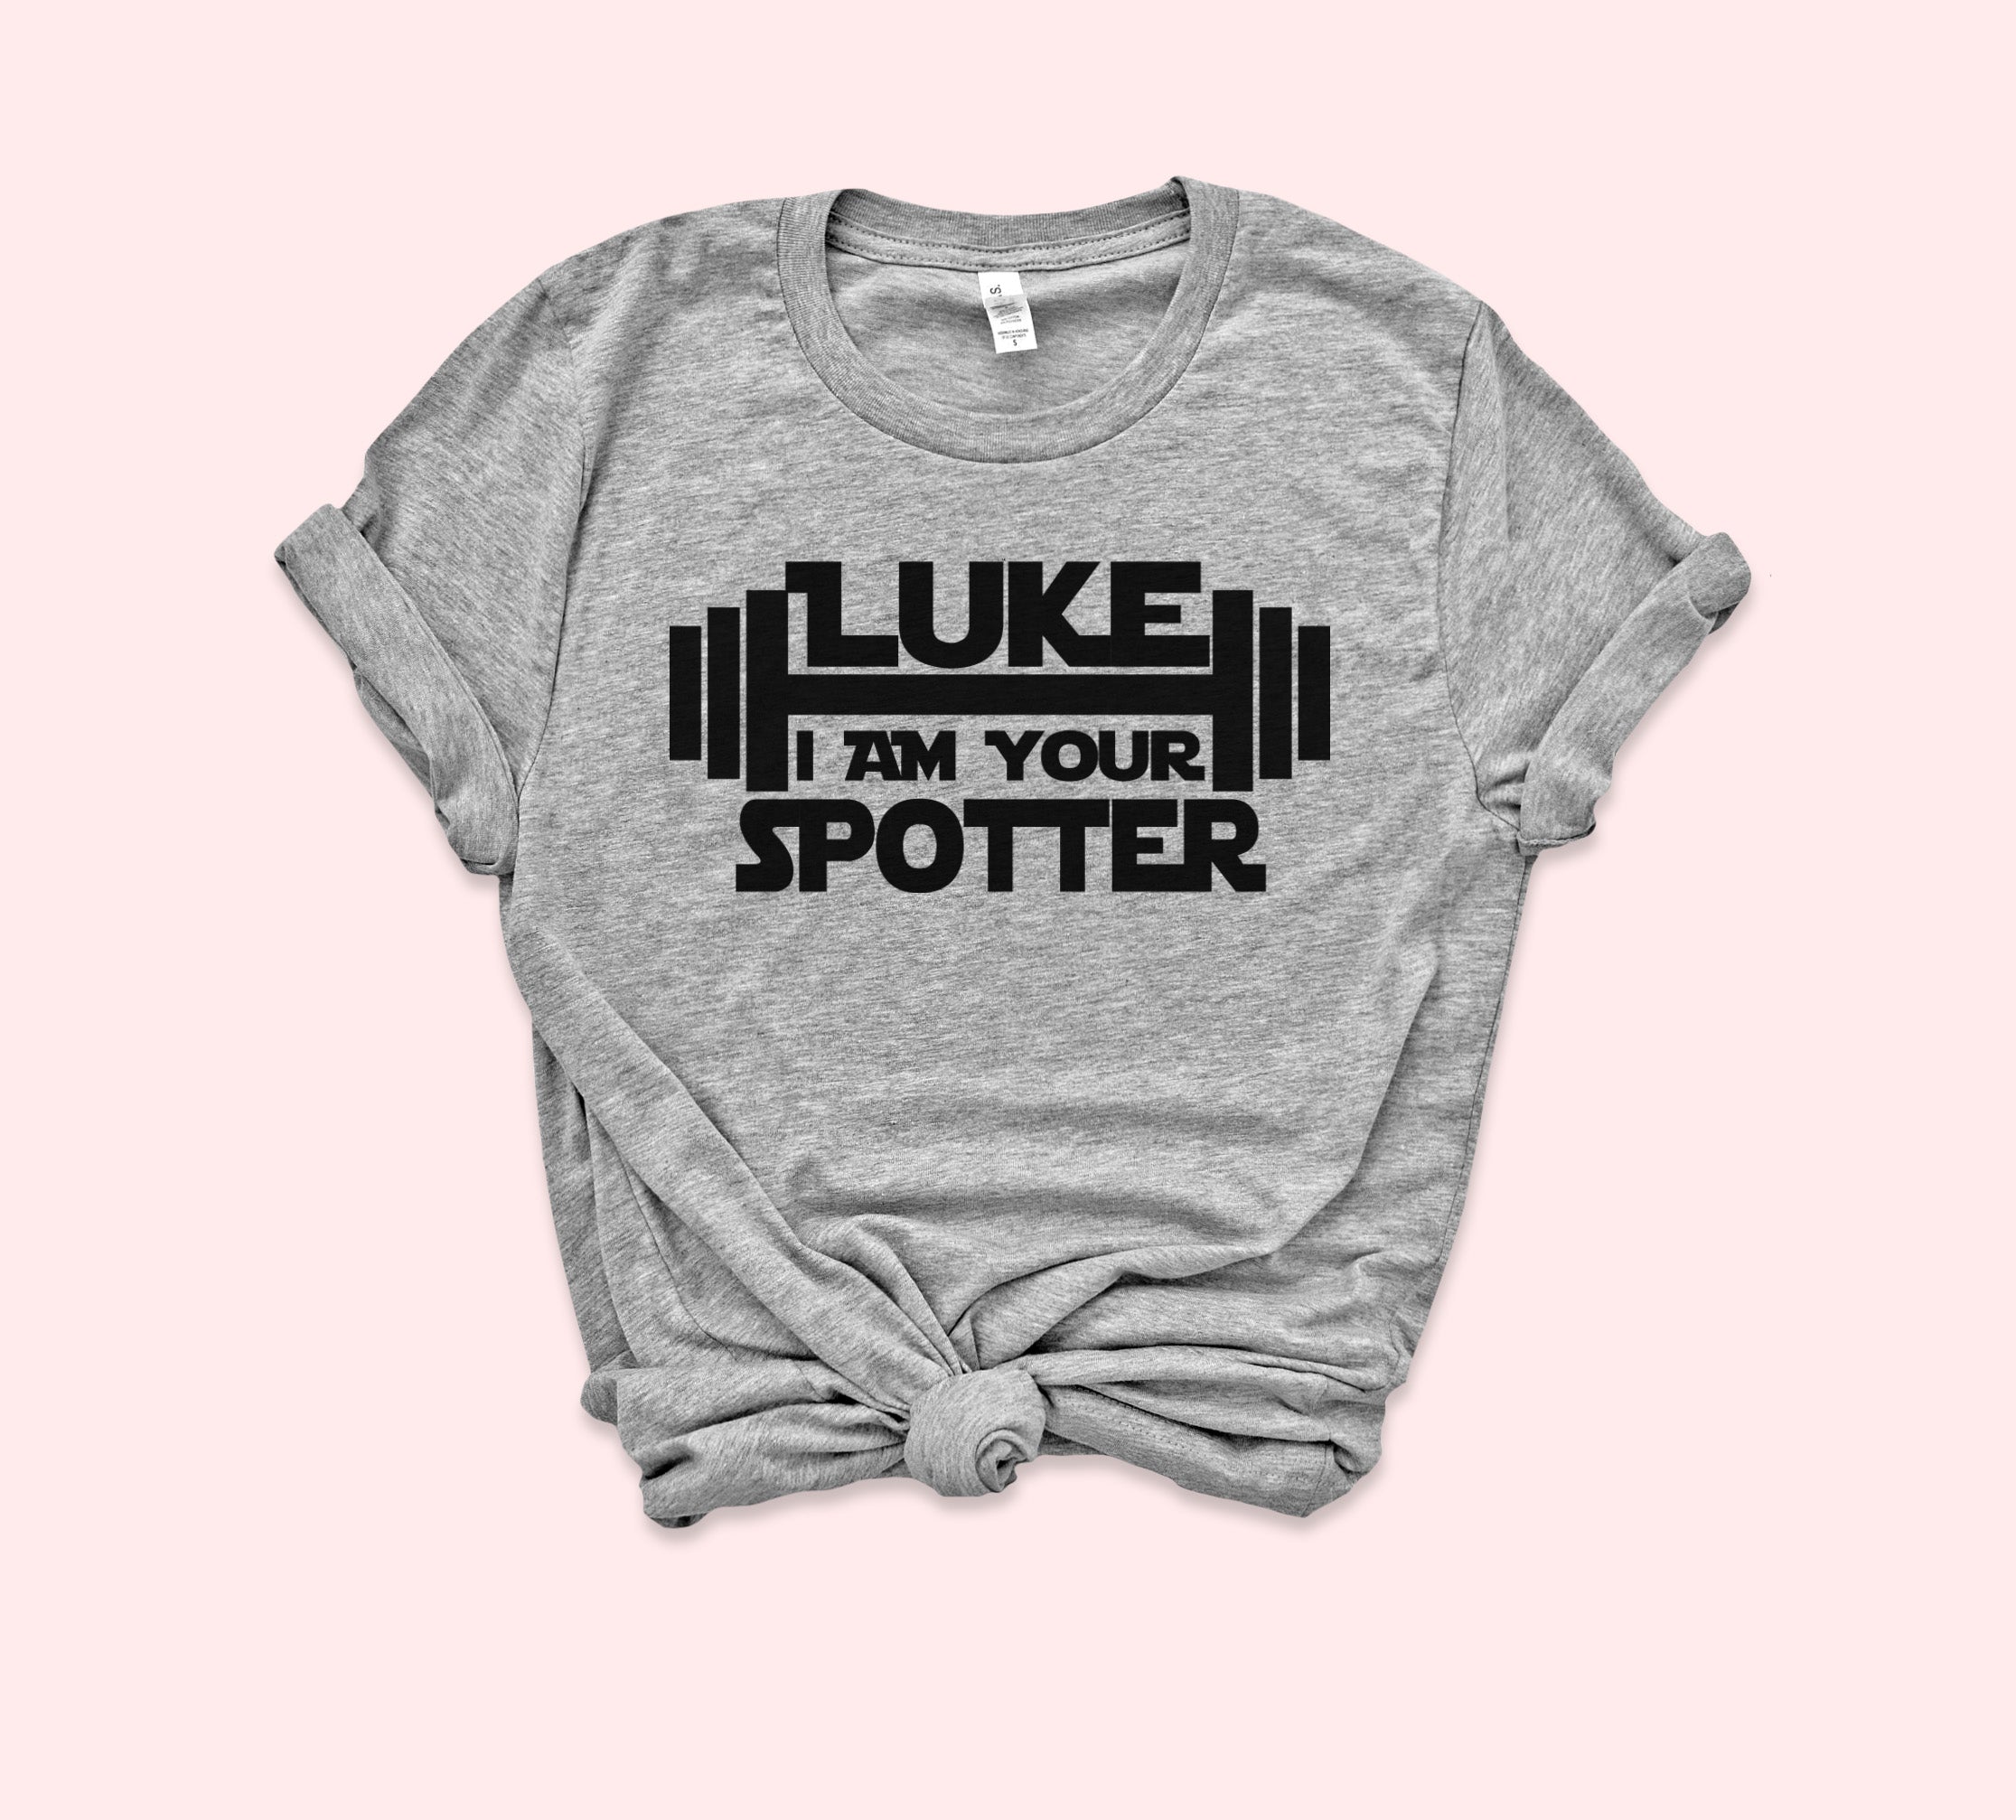 Luke I am Your Spotter Shirt - HighCiti